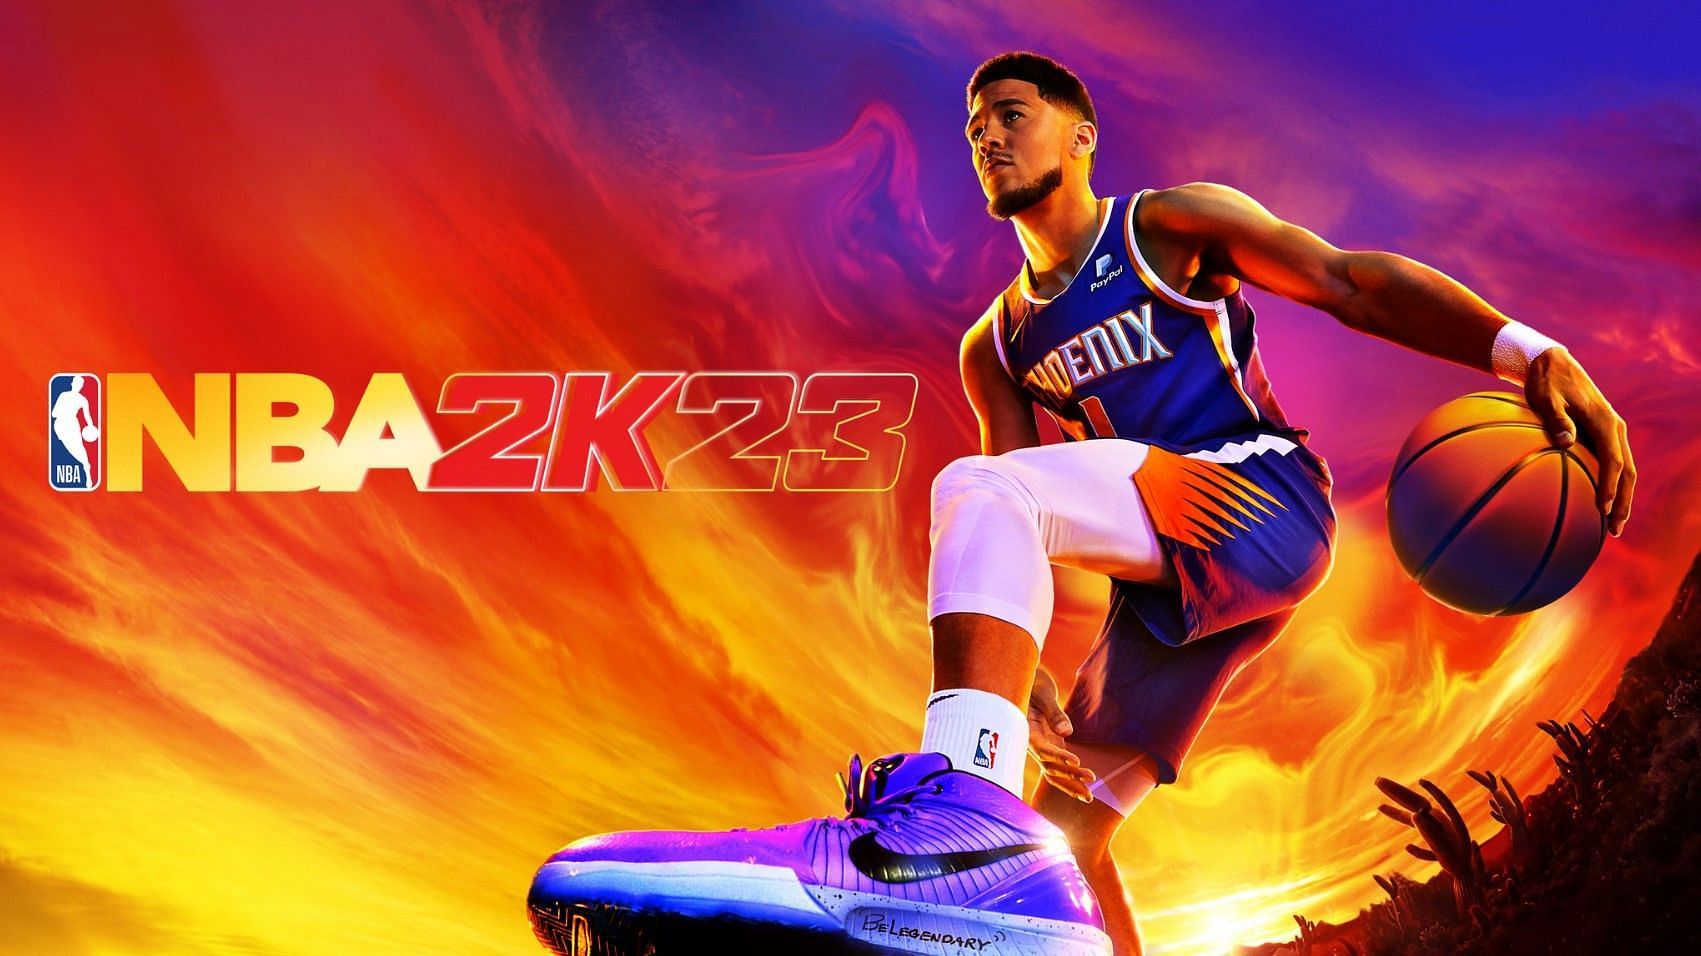 NBA 2K23 will have Devon Booker and Michael Jordan as the cover stars. (Image via Steam)